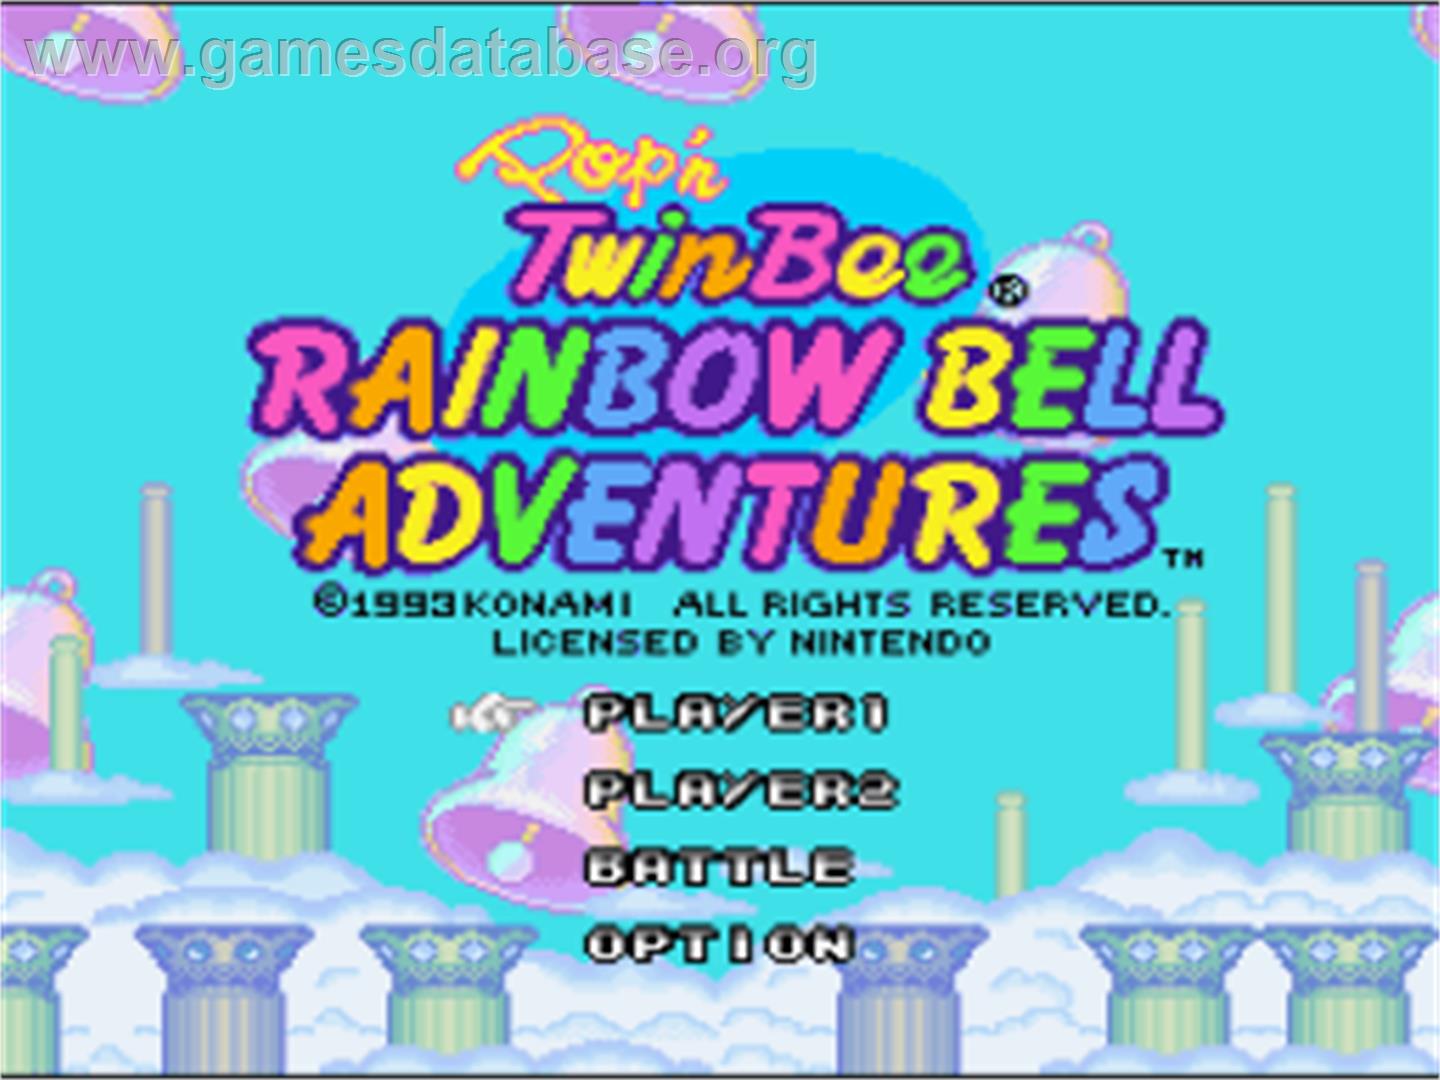 Pop'n TwinBee Rainbow Bell Adventures - Nintendo SNES - Artwork - Title Screen